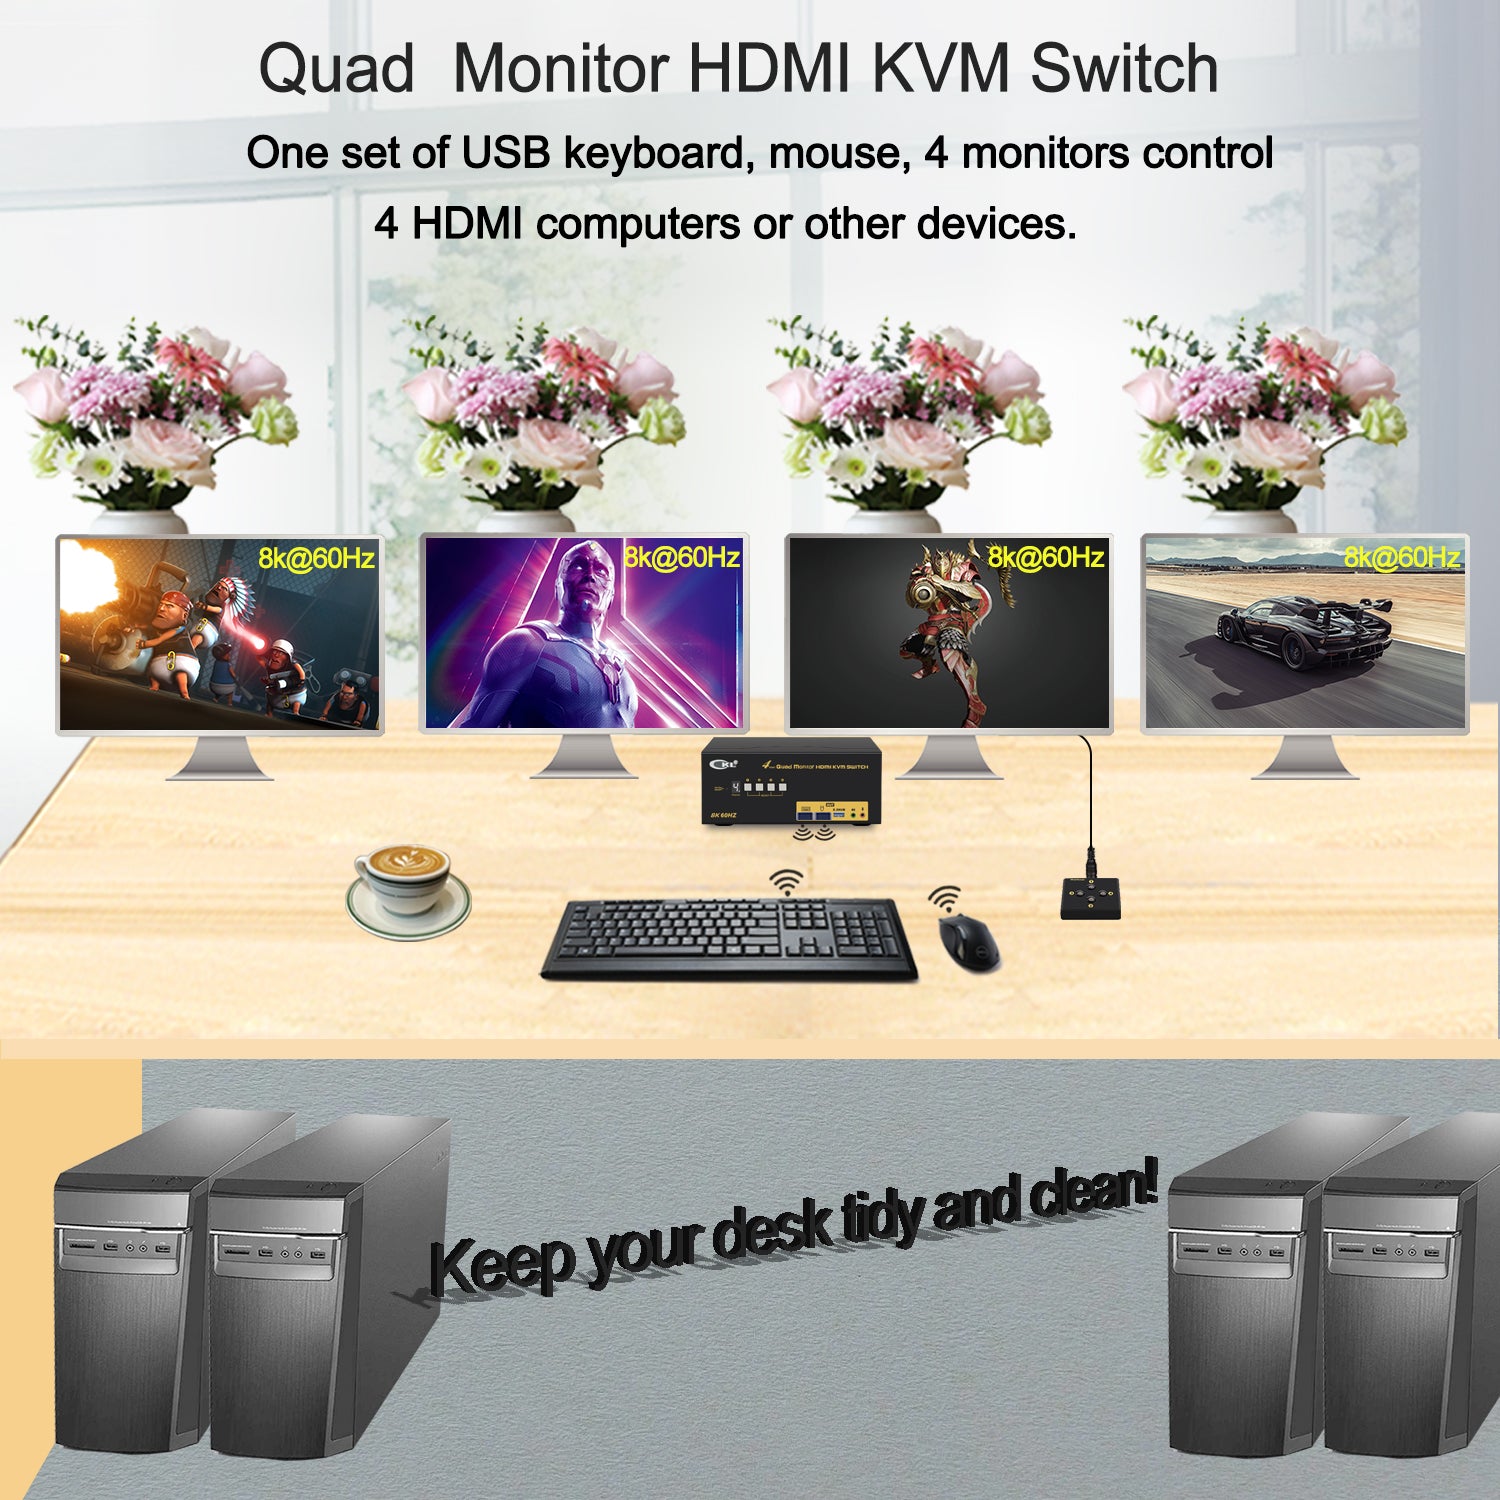 CKL 4 Port Quad Monitor USB 3.0 KVM Switch HDMI 2.1 8K 60Hz 4K 120Hz 144Hz with EDID for 4 Computers 4 Monitors (944HUA-5)